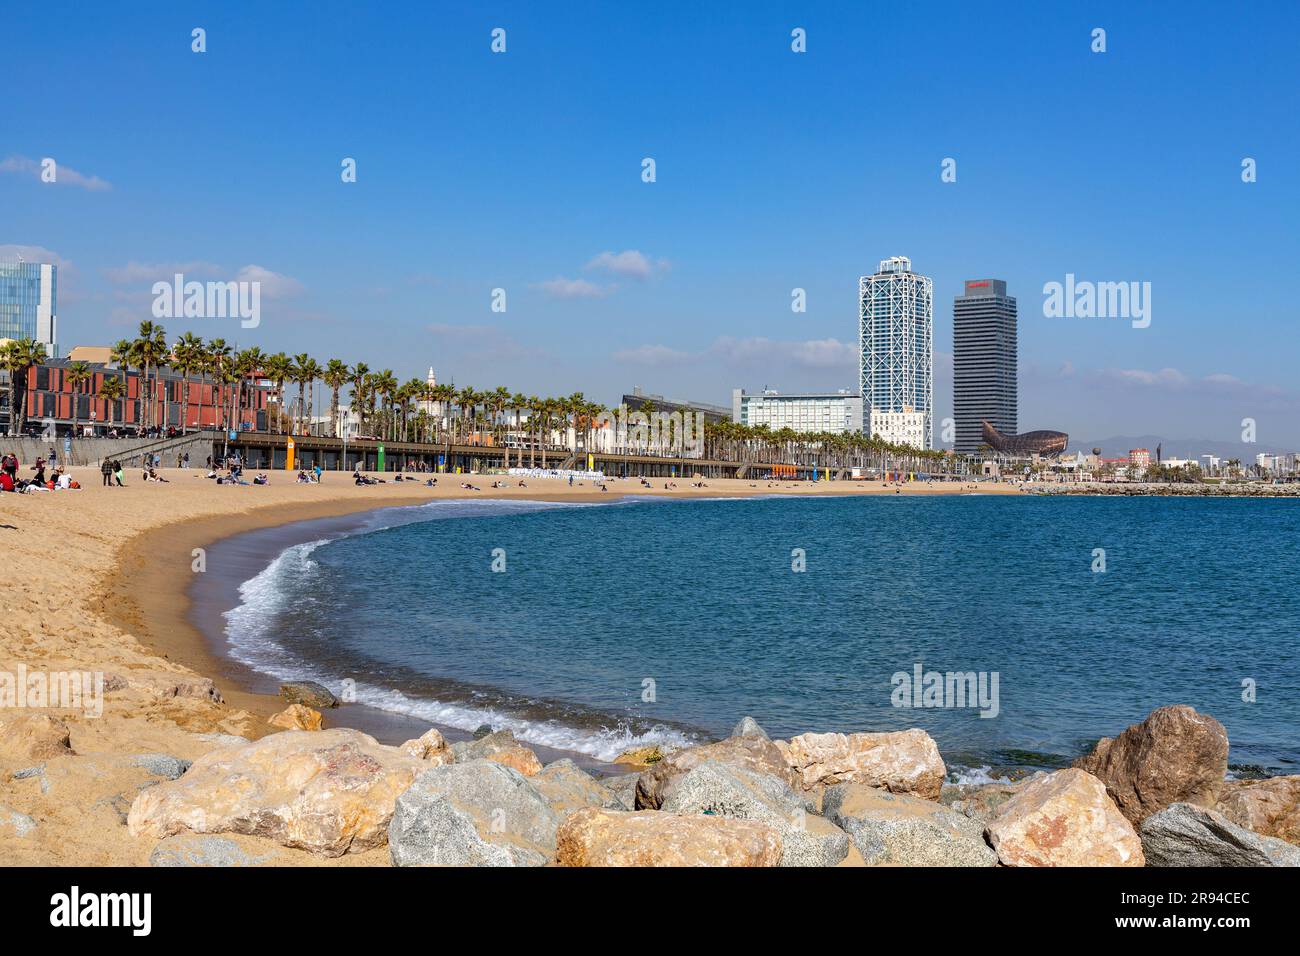 Barcelona, Spain - FEB 10, 2022: Buildings and people along the Barceloneta beach in Ciutat Vella district of Barcelona, the Mediterranean coast, Spai Stock Photo